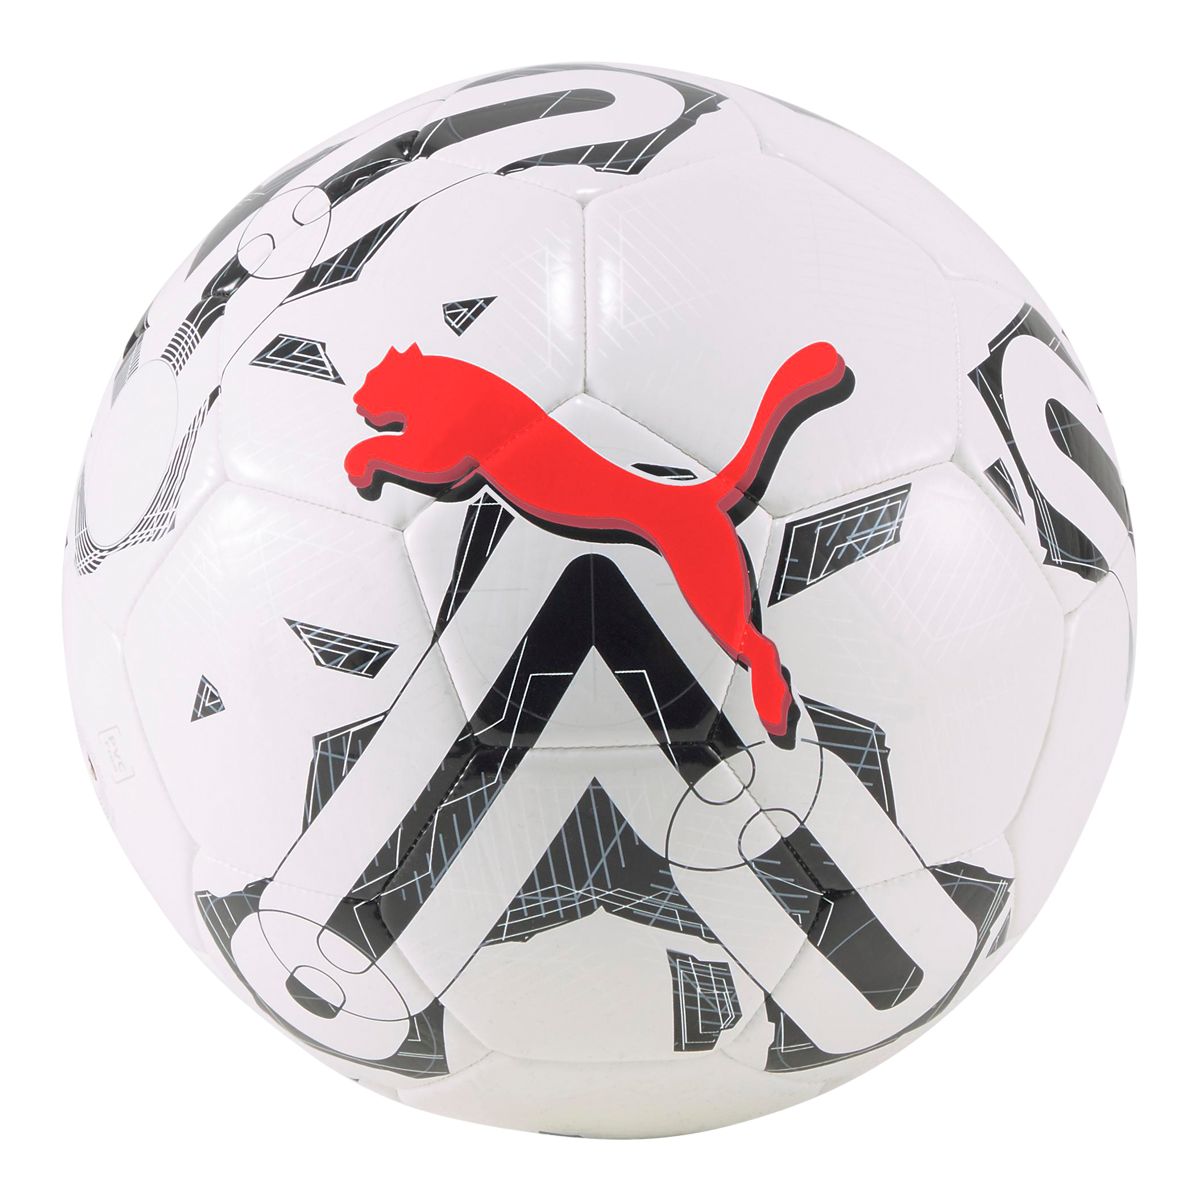 Puma Orbita 6 MS Senior Soccer Ball - Size 5